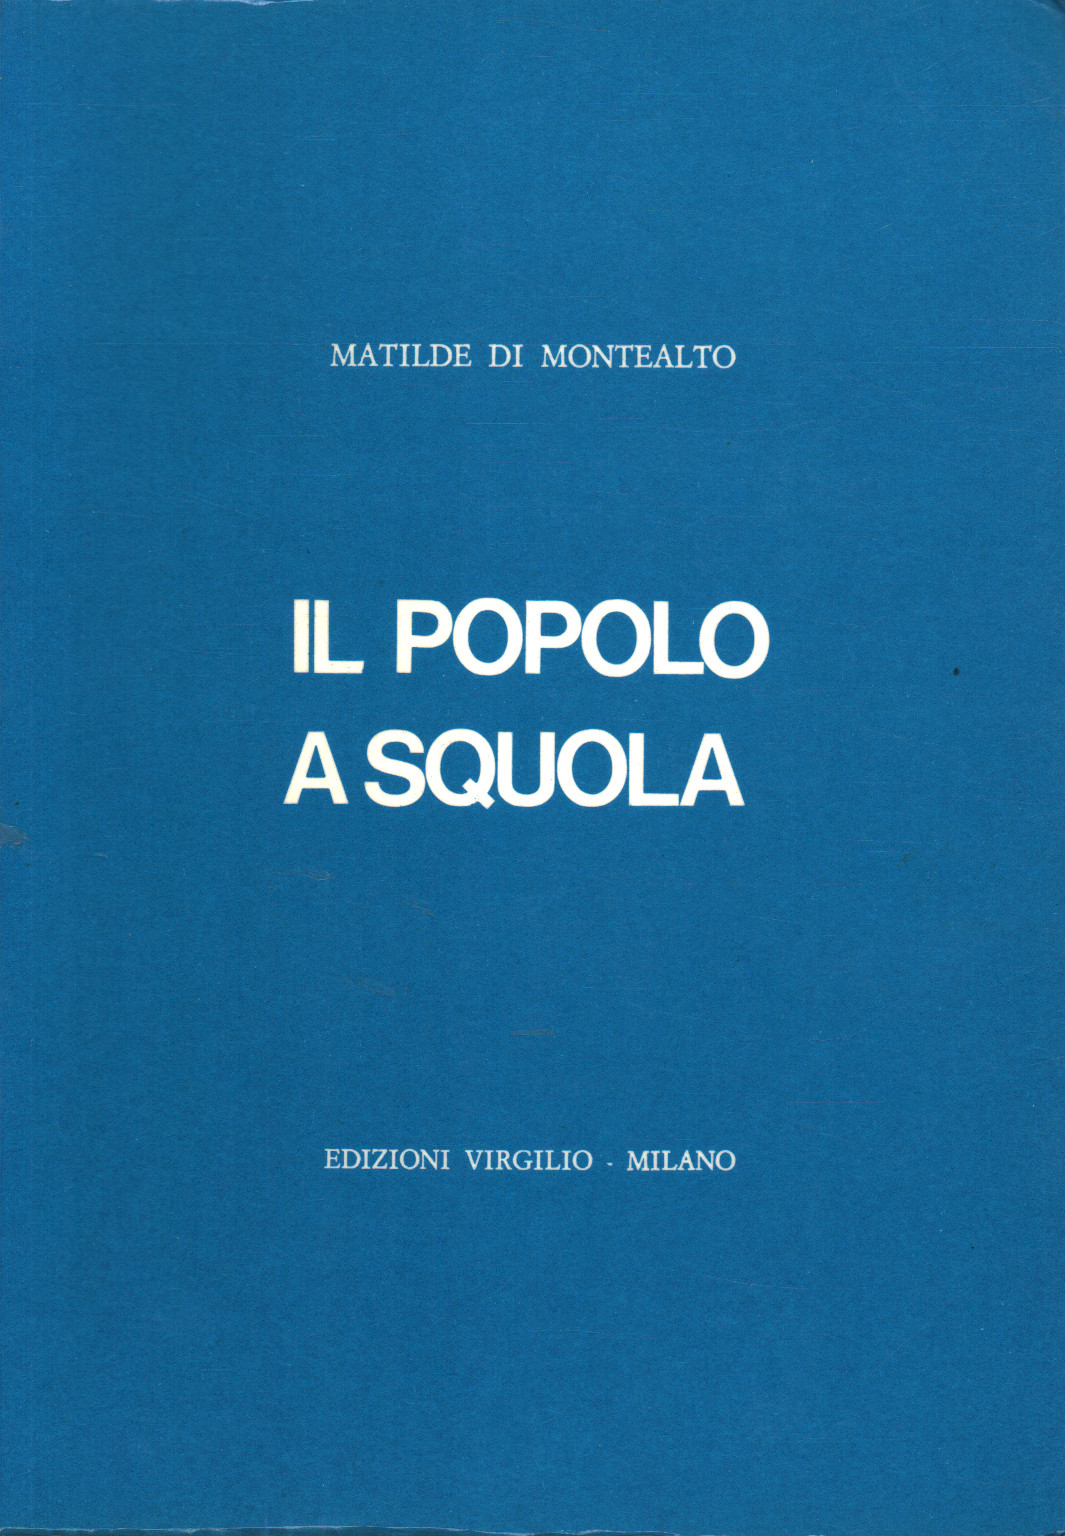 The people at squola, Matilda of Montealto